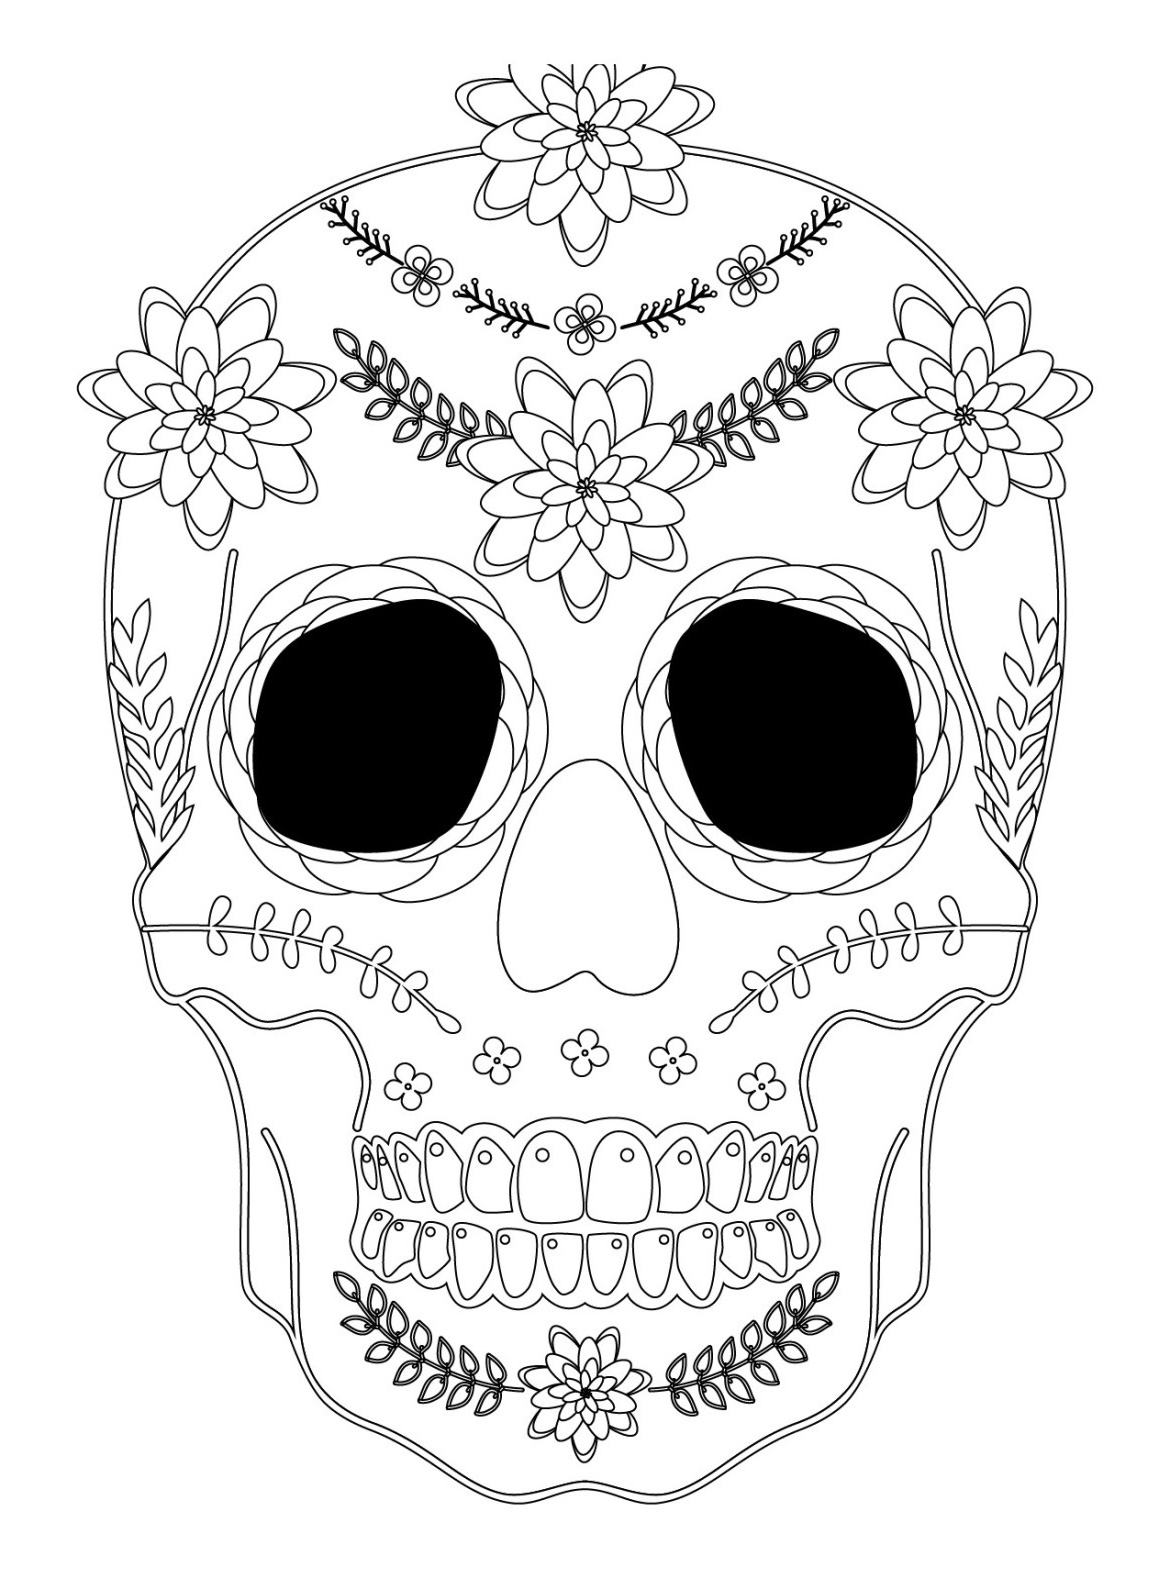 Dessin Qui Font Peur Luxe Images Sugar Skull Coloriage Halloween A Imprimer Qui Fait Peur